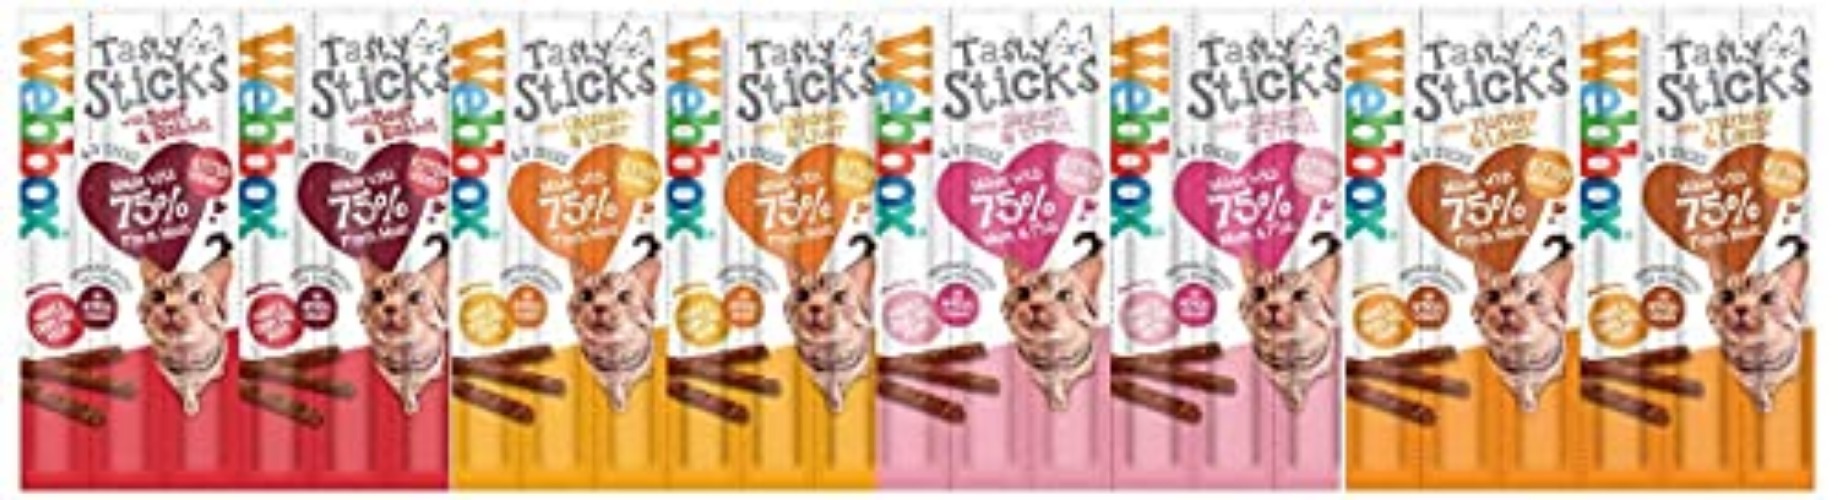 Webbox Cats Delight Tasty Sticks Chews Treats Variety Pack 12 x 6 (72 Sticks)